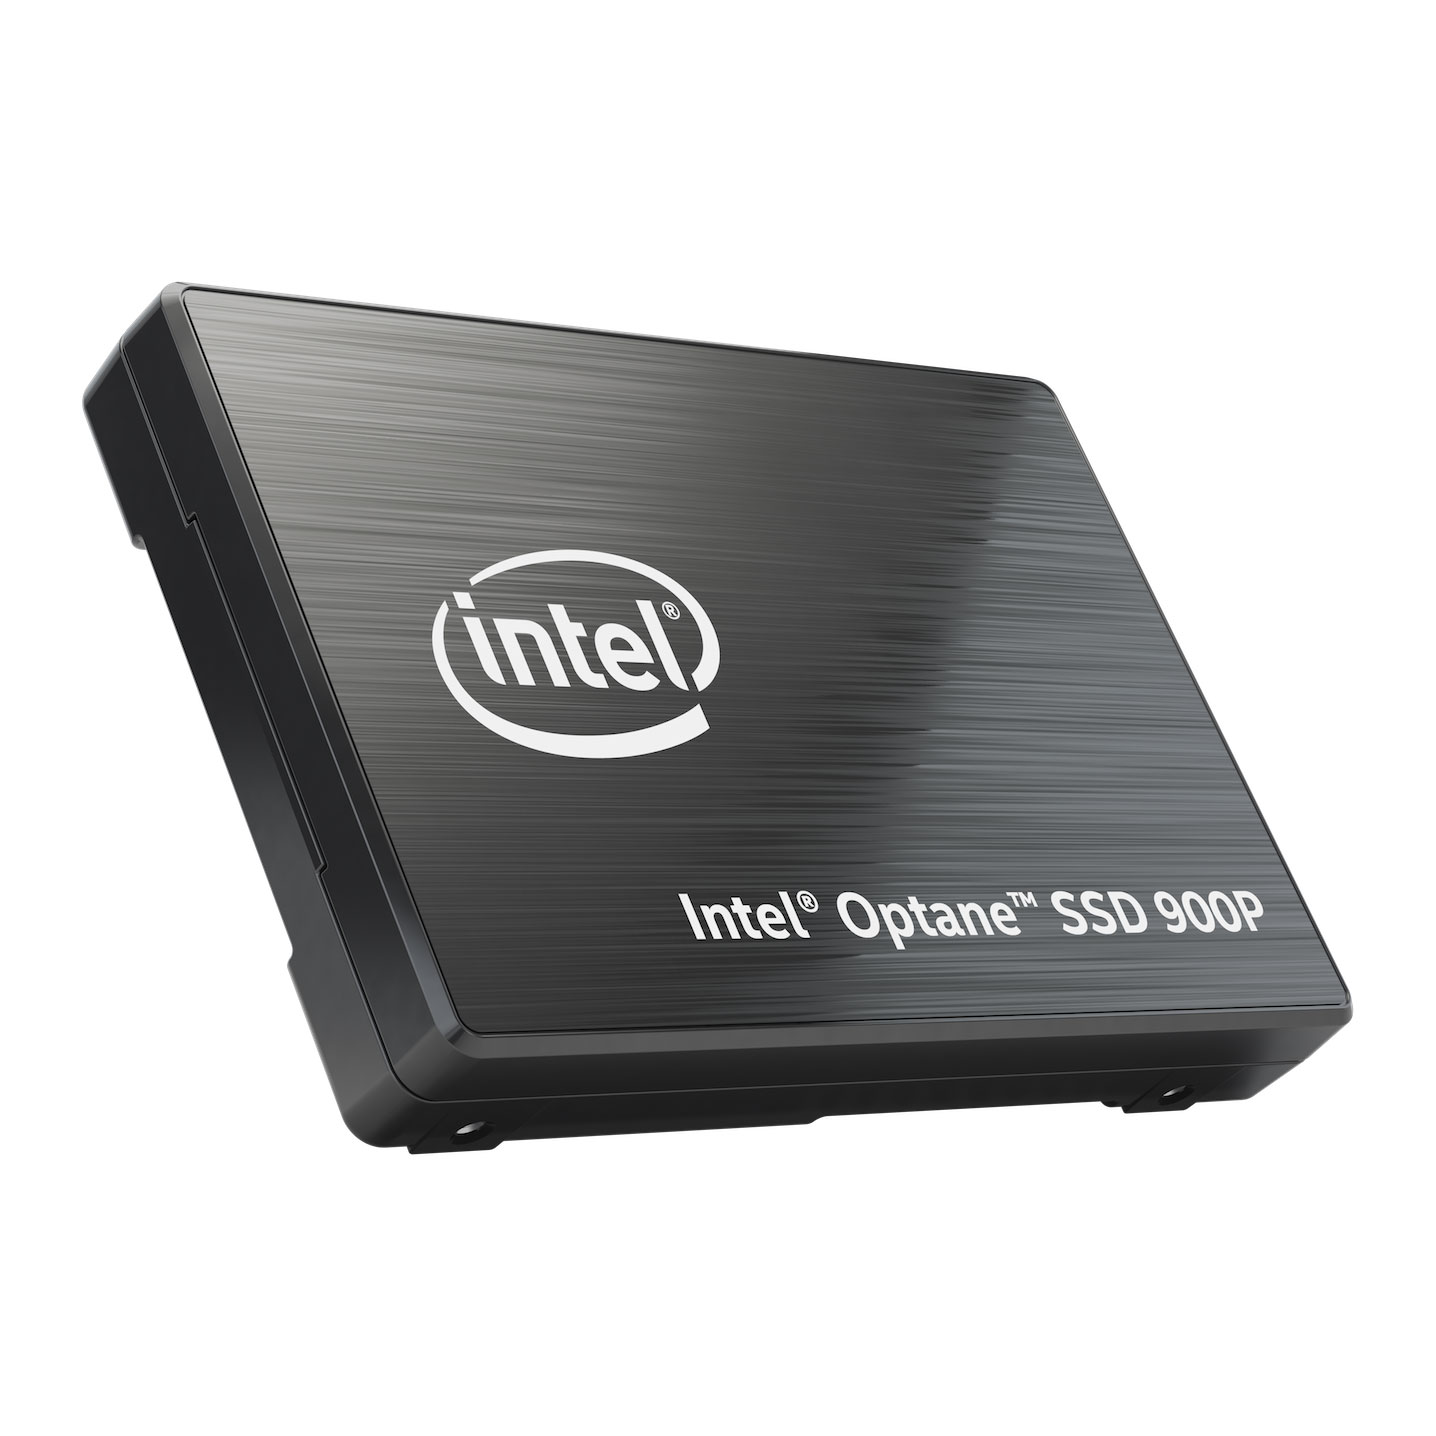 Intel - Intel Optane 900P 280GB 2.5 U.2 PCI-e Solid State Drive